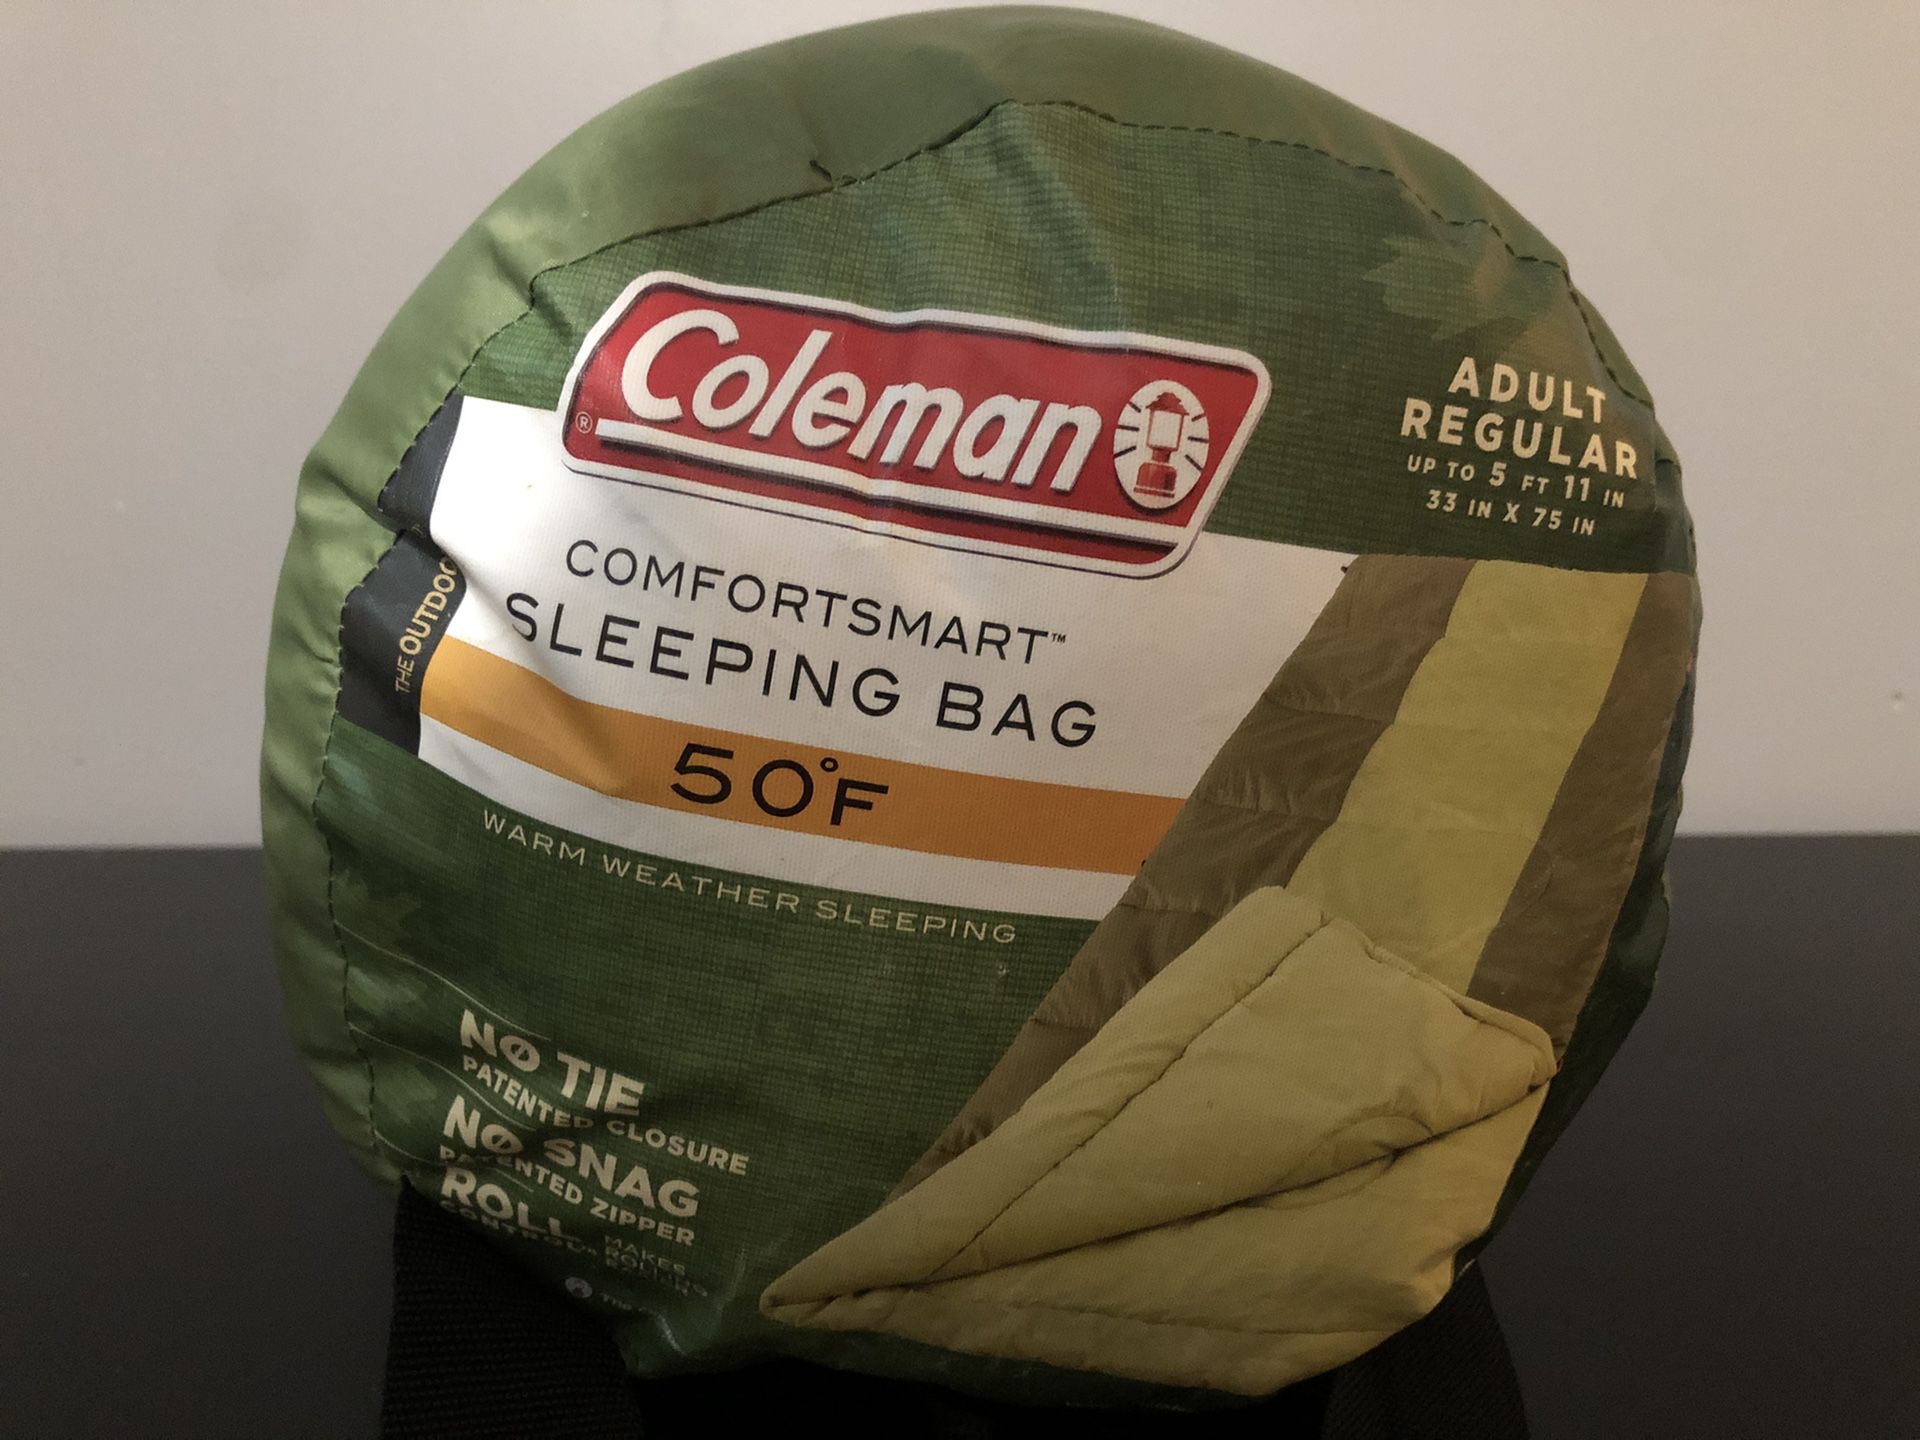 Coleman 50F 75” Warm Weather Comfort Smart Sleeping Bag